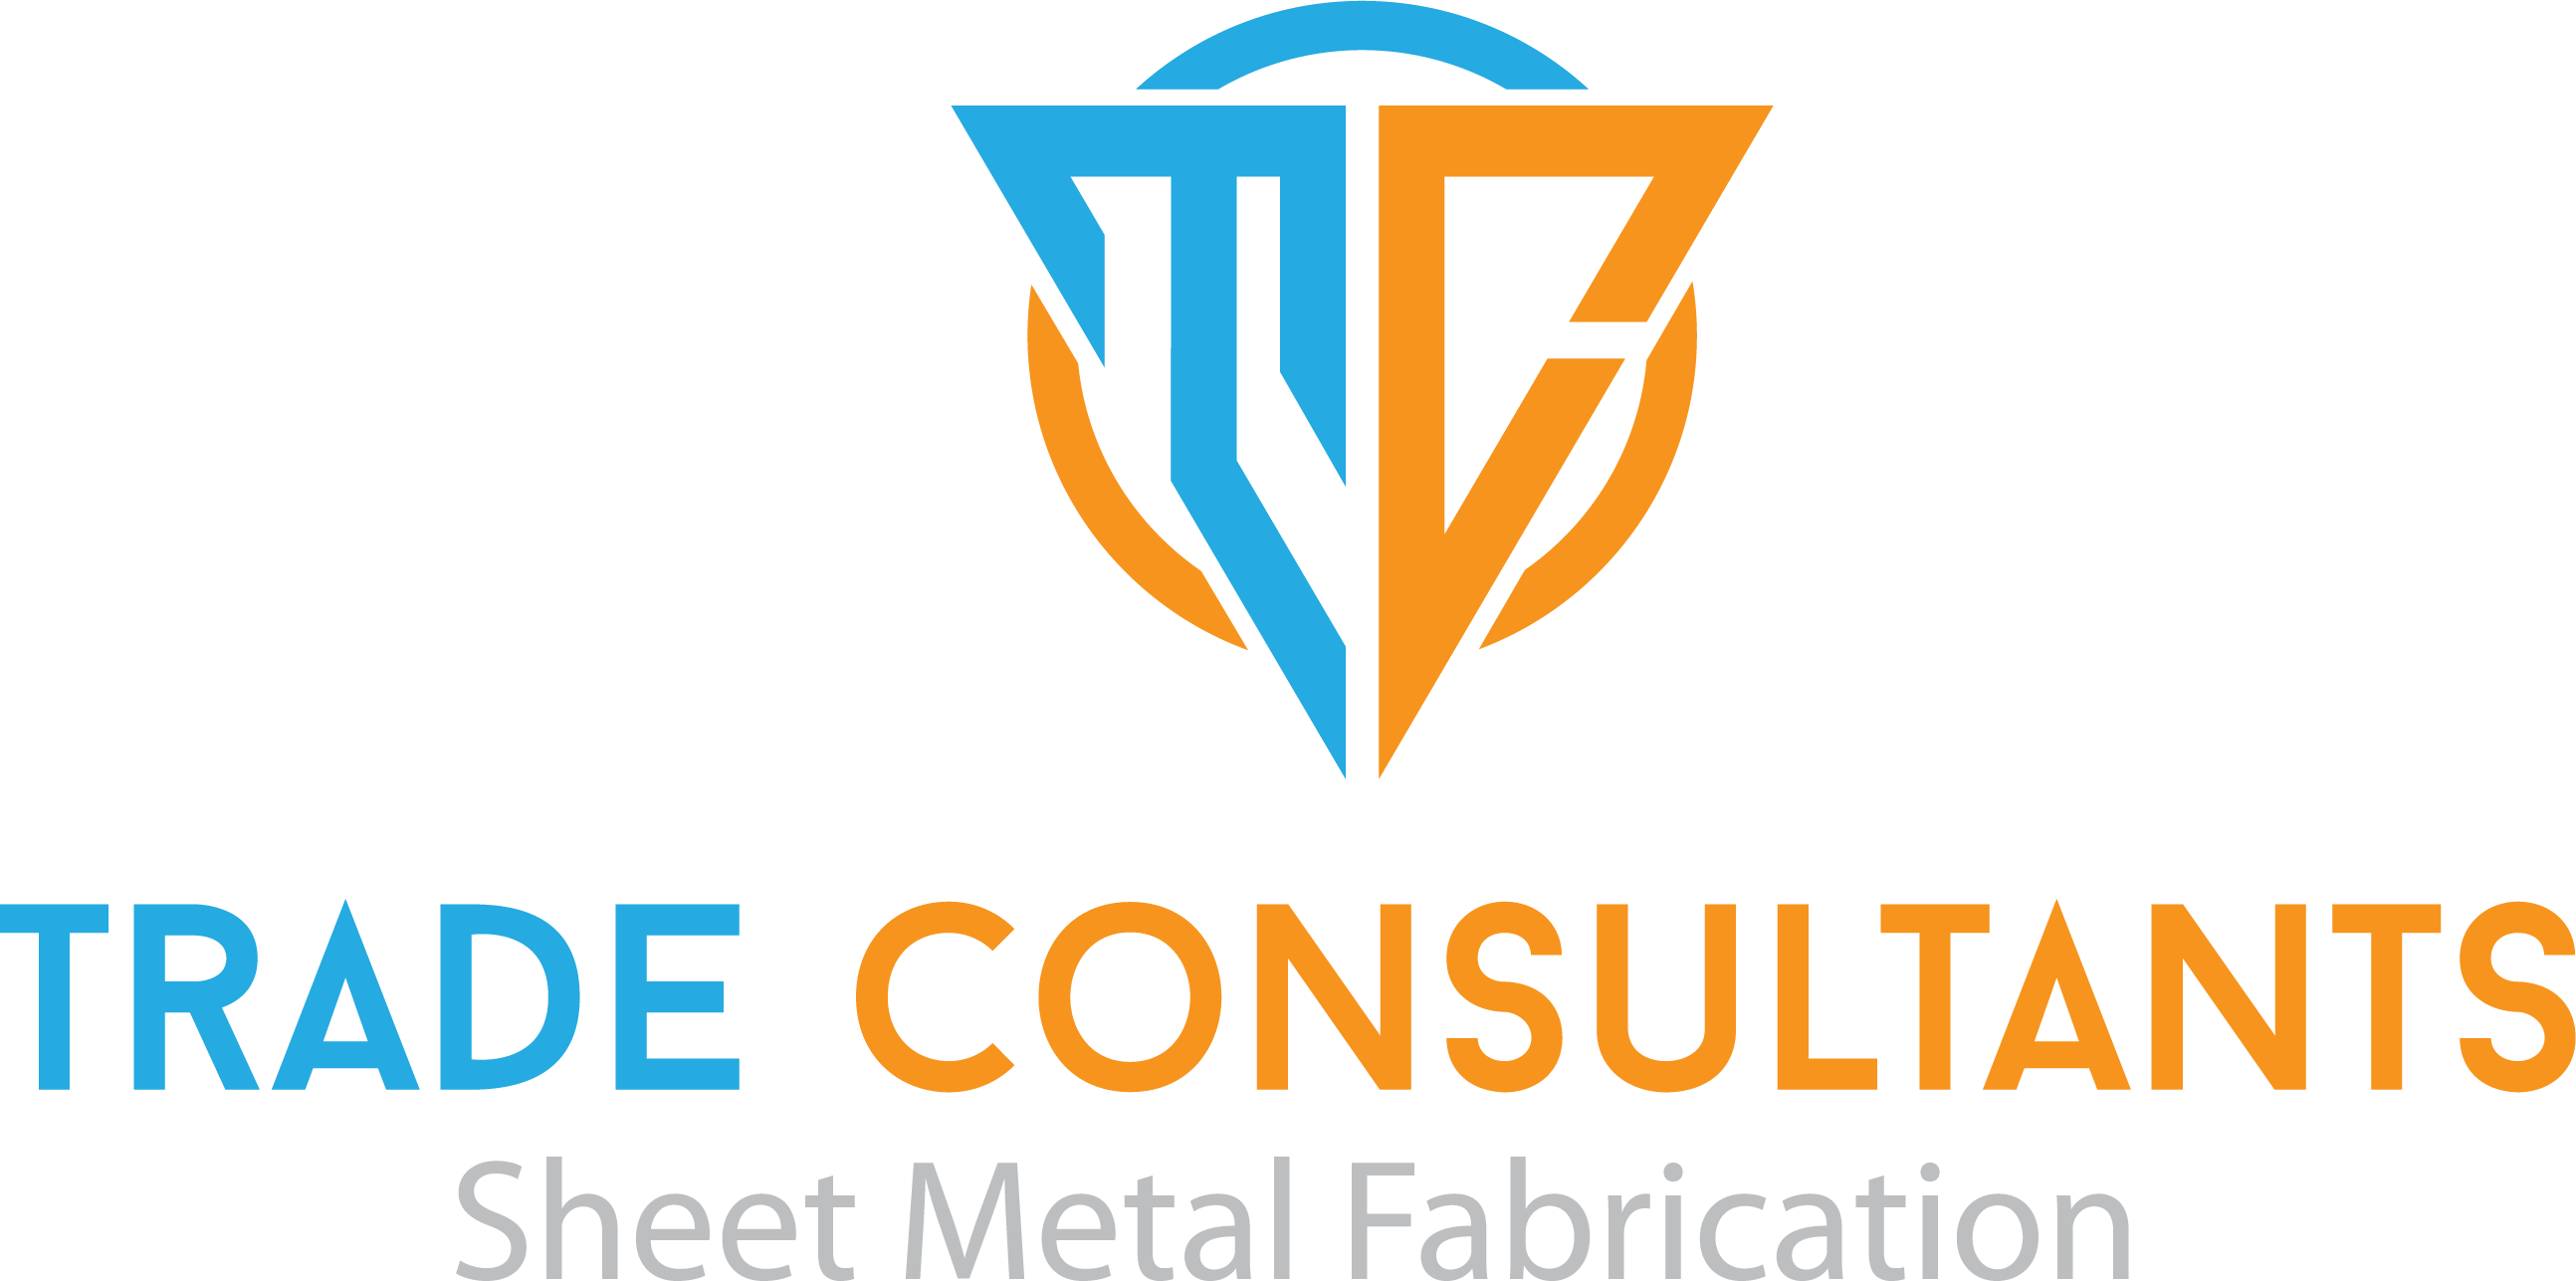 Trade Consultants Sheet Metal Fabrication